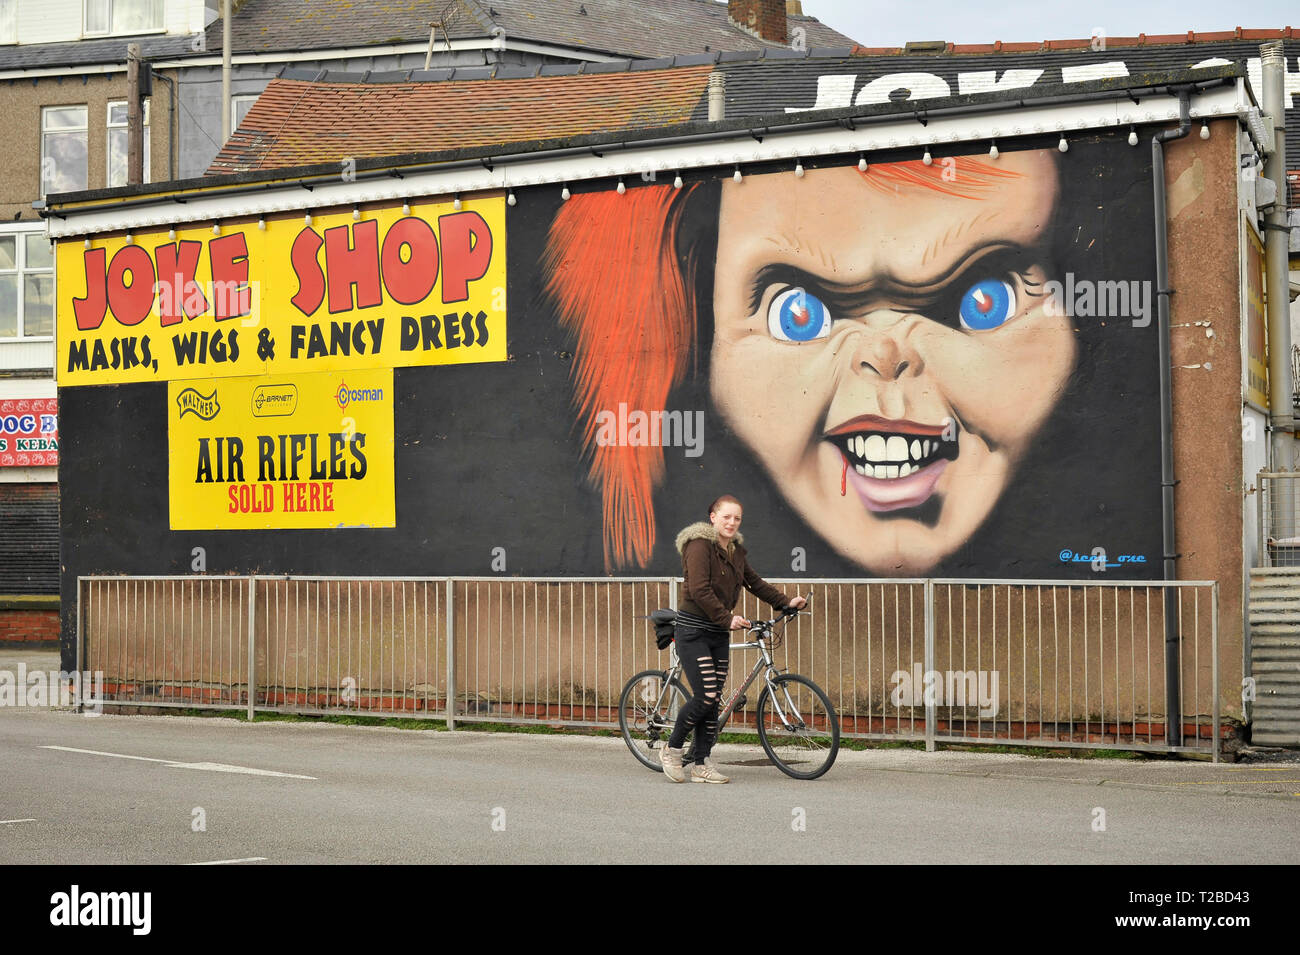 Women pushing bike past poster with image of evil clown advertising joke shop Stock Photo